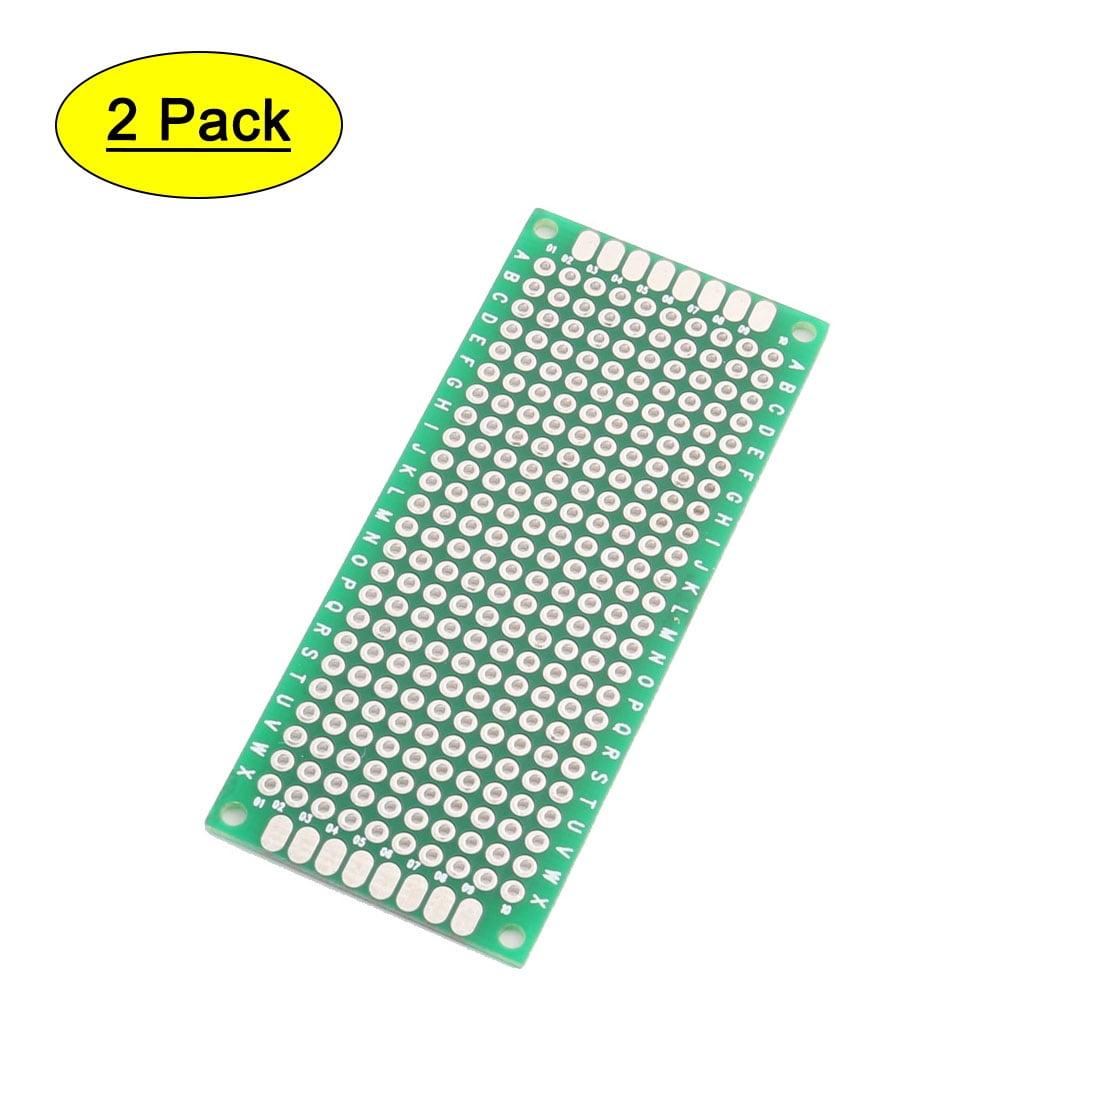 5cmx7cm Sided Prototype Universal PCB Circuit Board Breadboard - Walmart.com